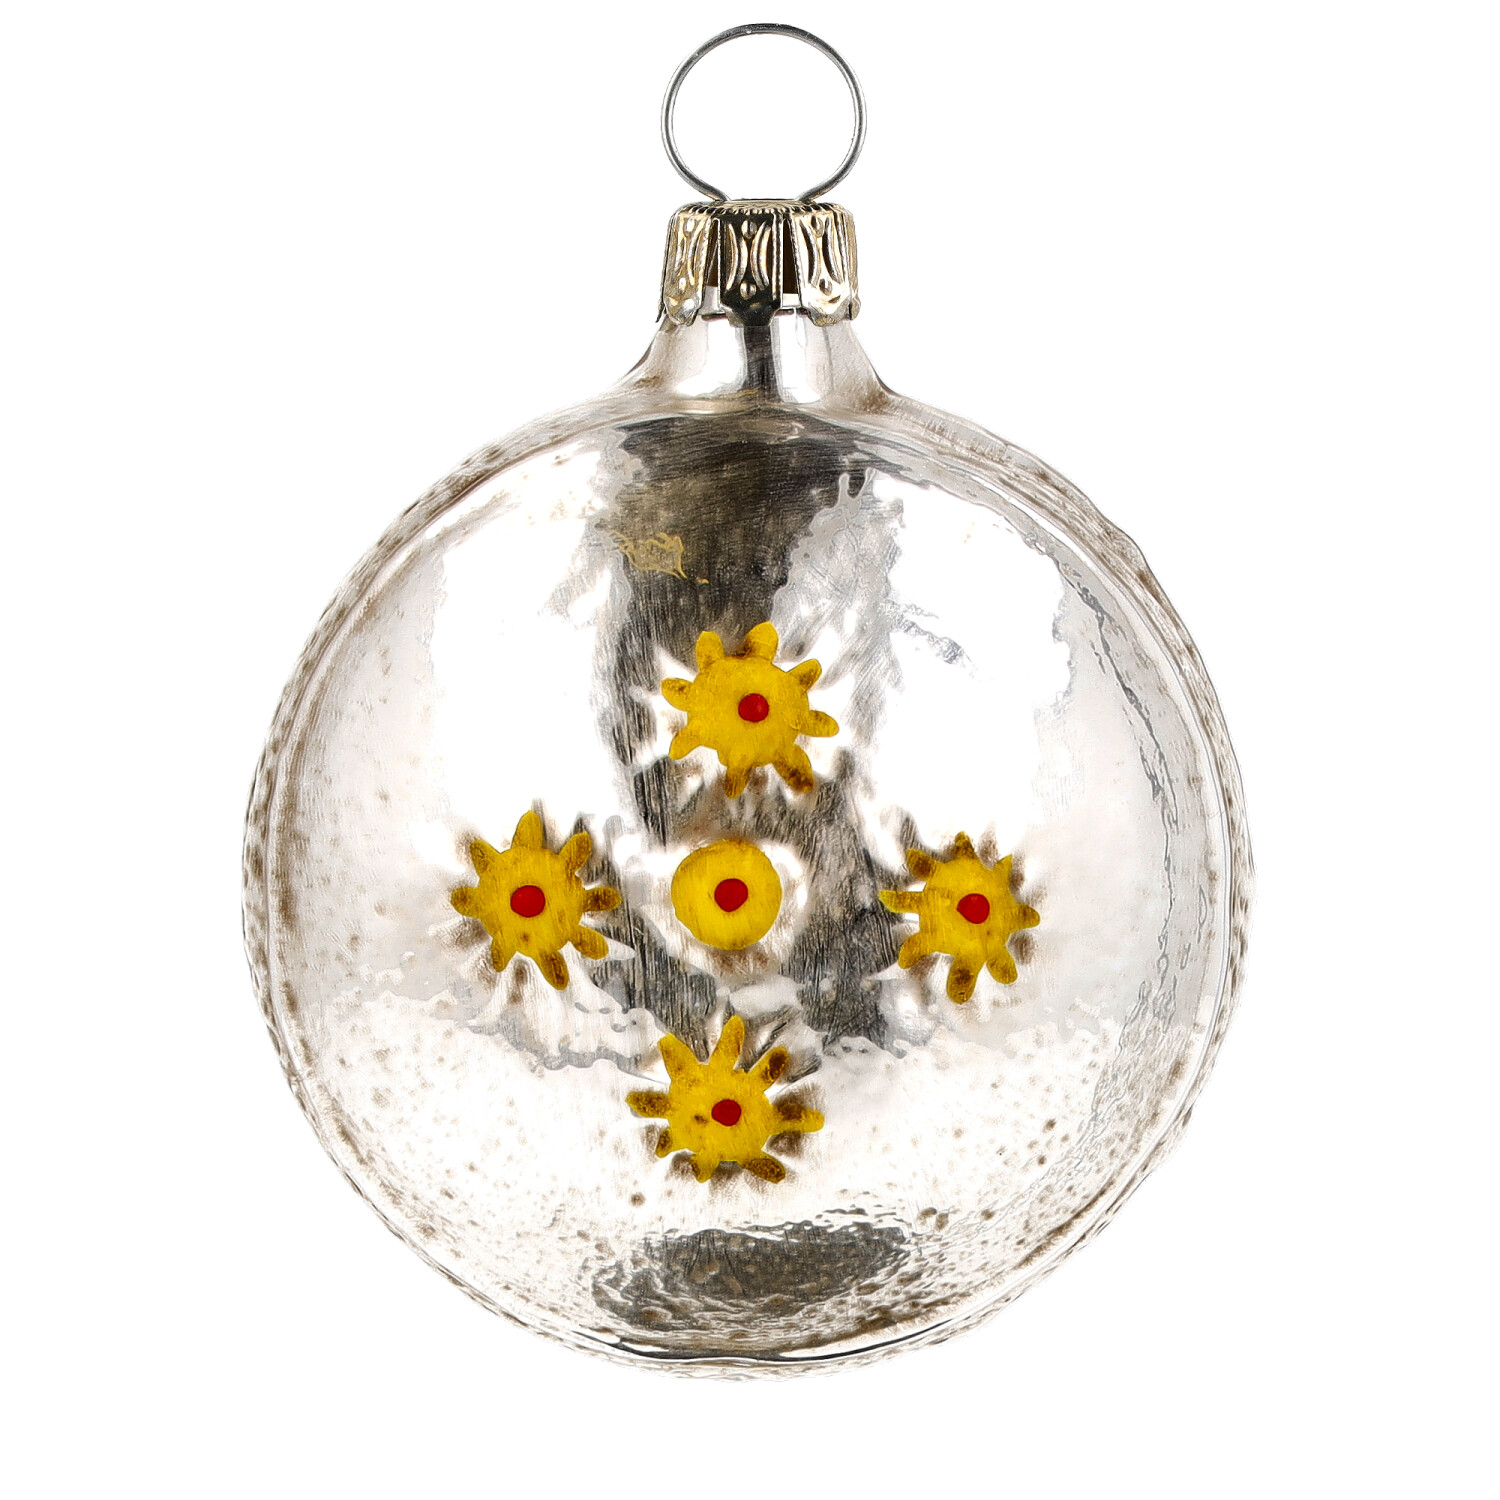 Retro Vintage style Christmas Glass Ornament - Christmas tree and stars